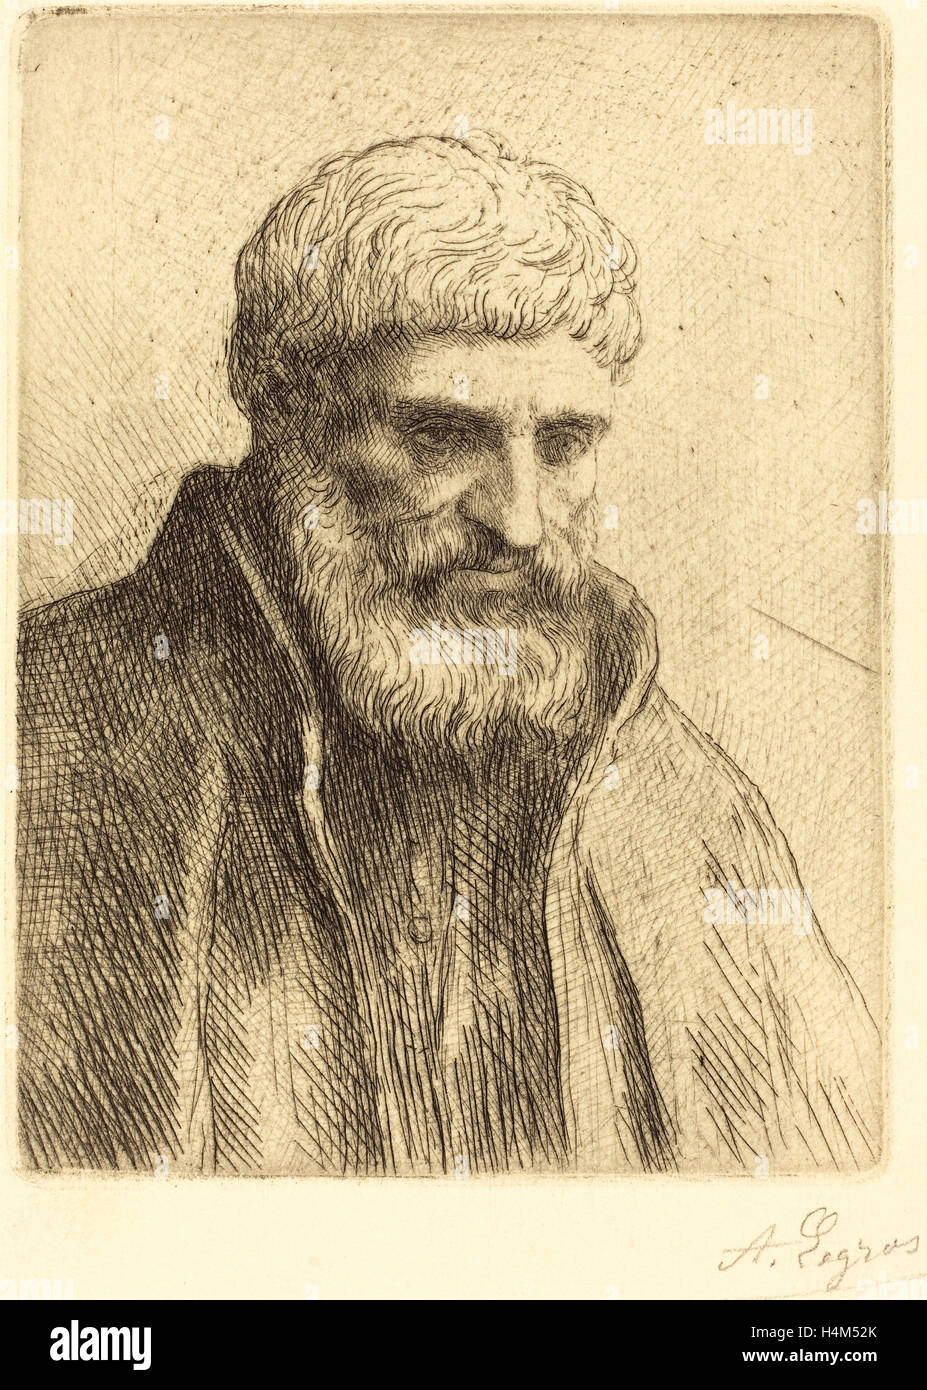 Alphonse Legros, Study of an Old Man (Etude de vieillard), French, 1837 - 1911, etching Stock Photo